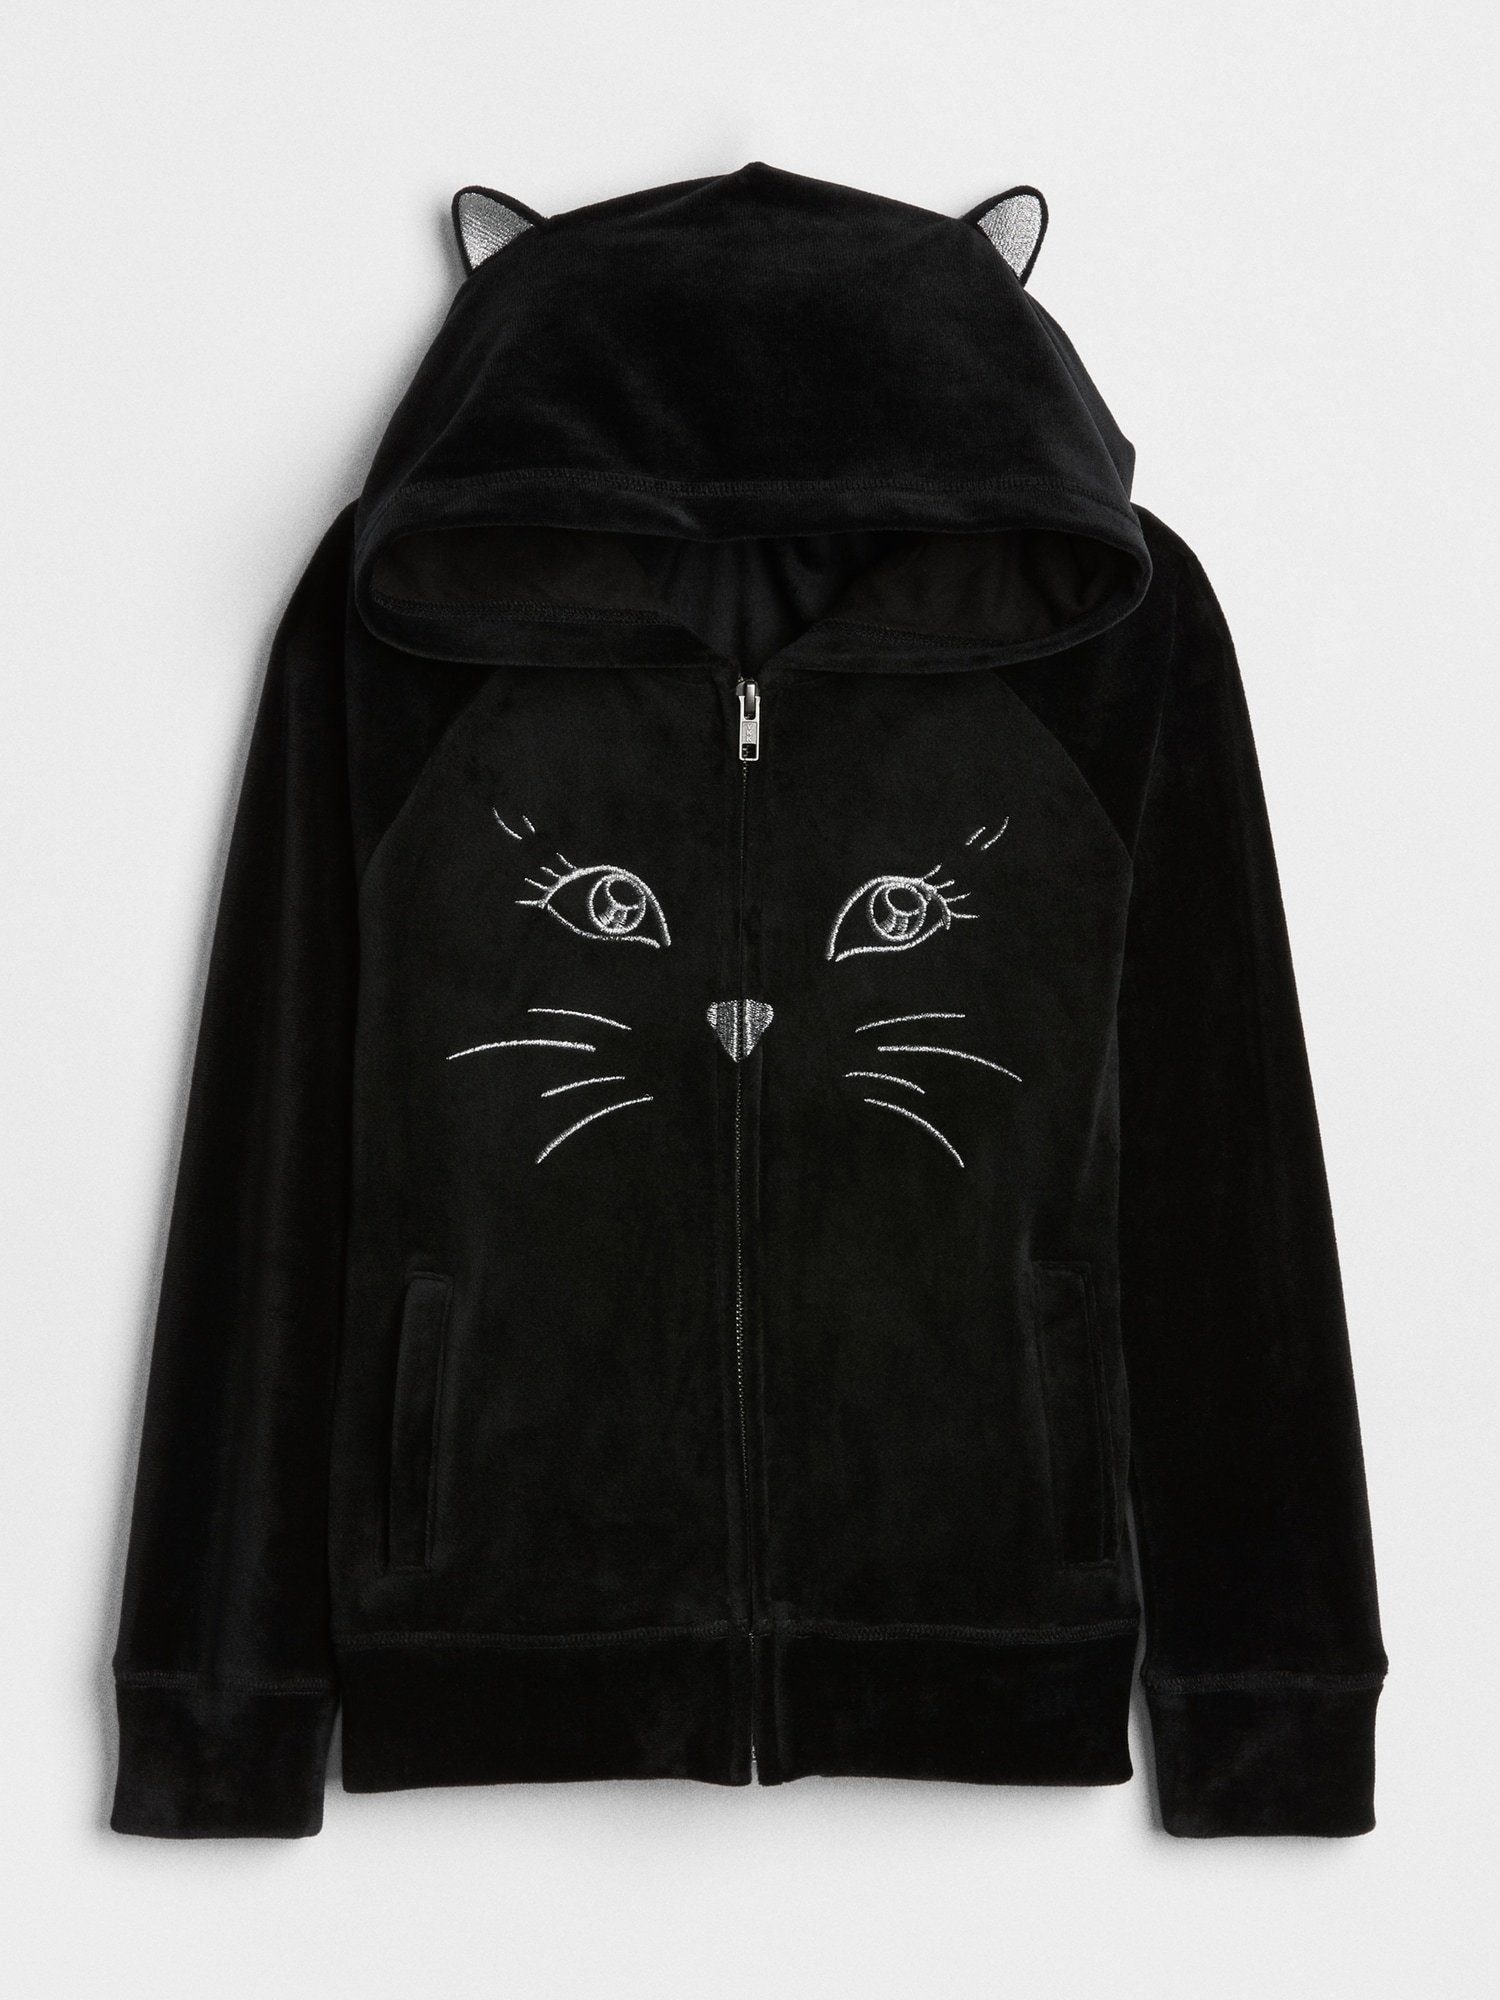 Kedi Baskılı Kapüşonlu Sweatshirt product image